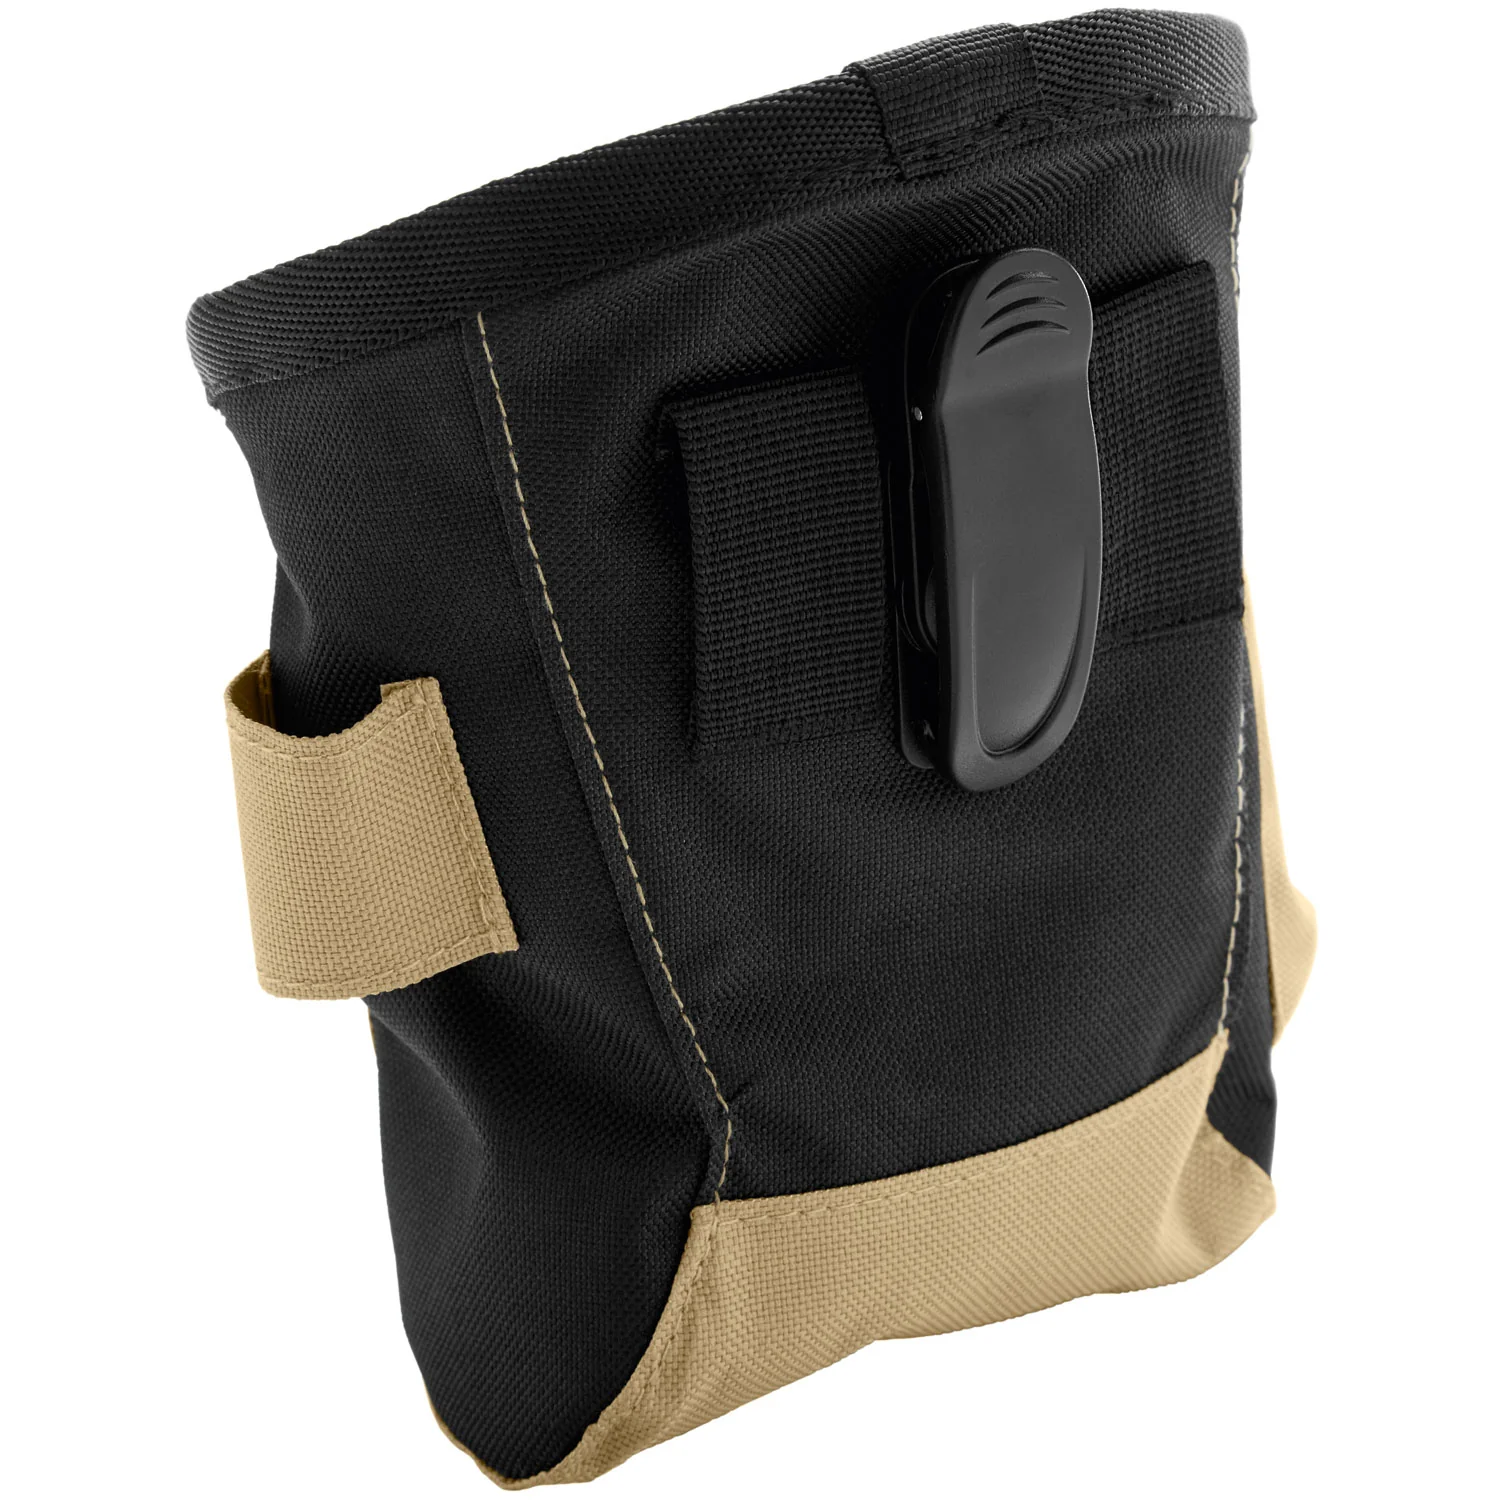 Afbeelding Hunter Belt Bag Bugrino Standard – Beige/Zwart